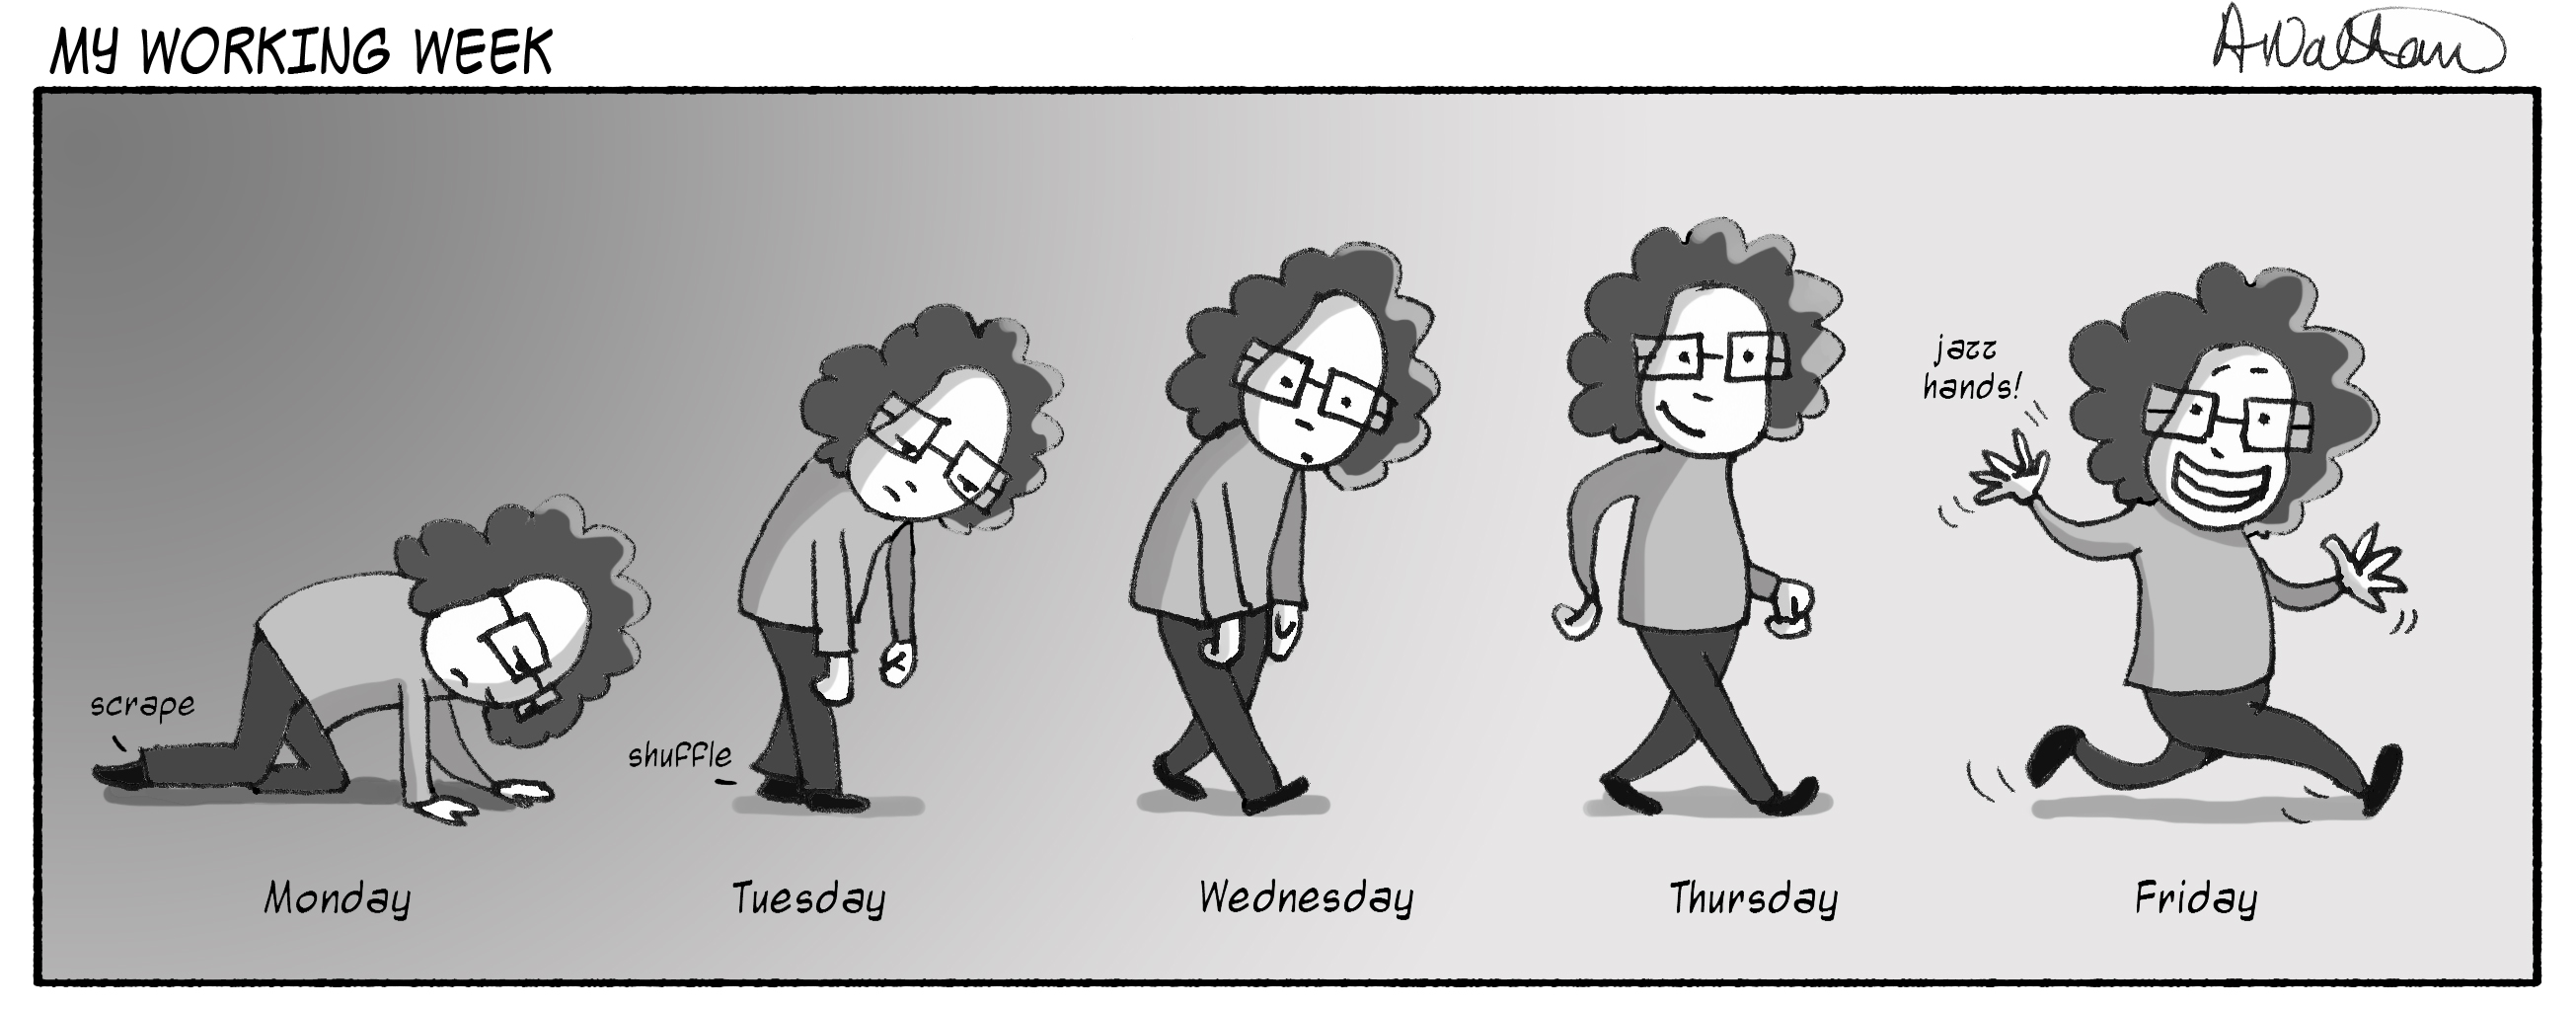 I hate Mondays. - Page 2 Weekdays